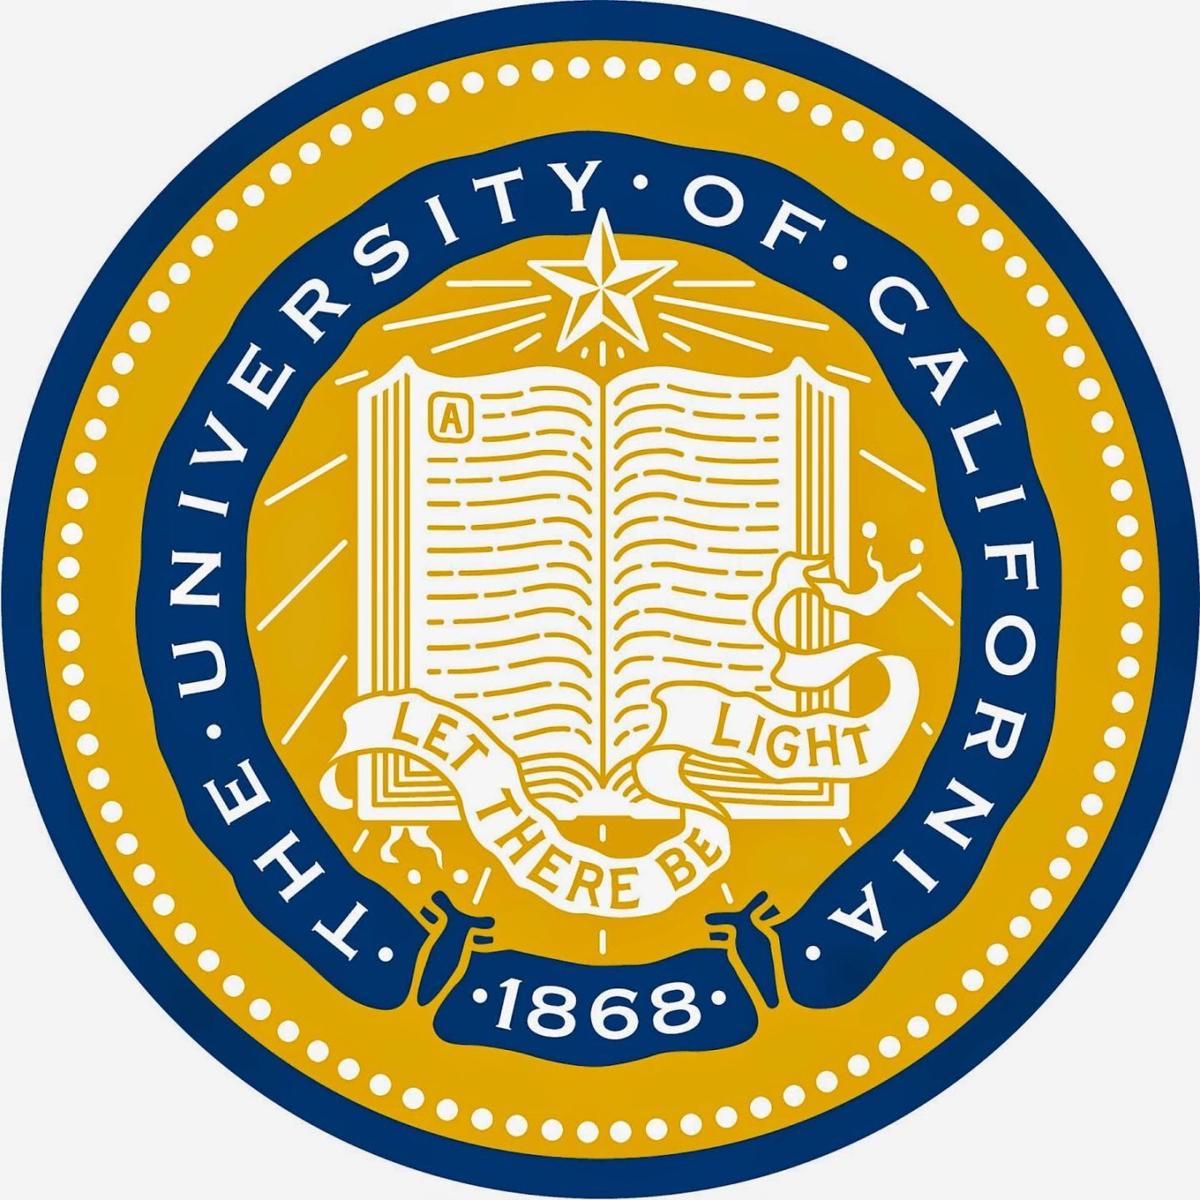 University of California logo